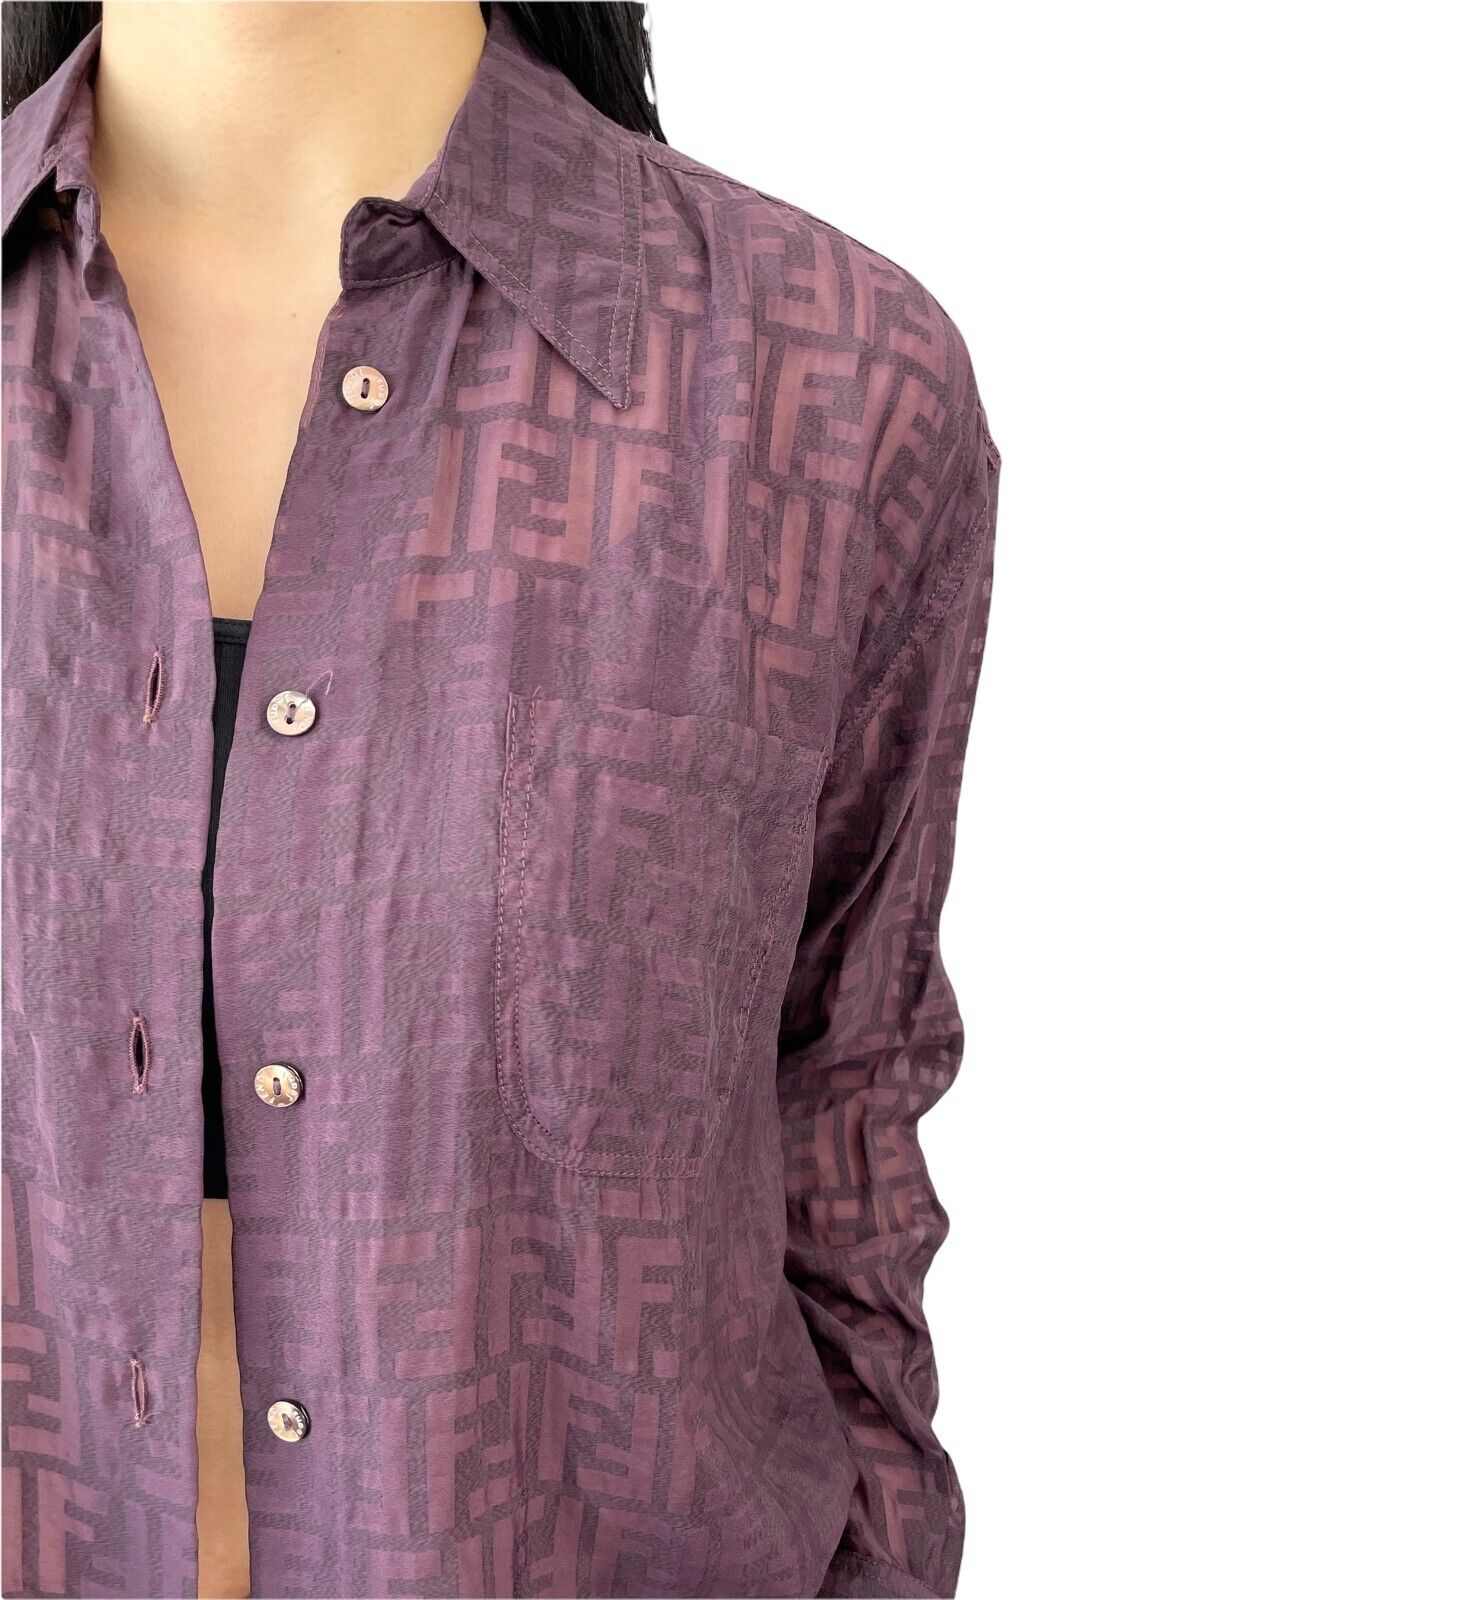 FENDI Vintage Zucca Monogram Logo Button Up Shirt Top See-through Purple RankB